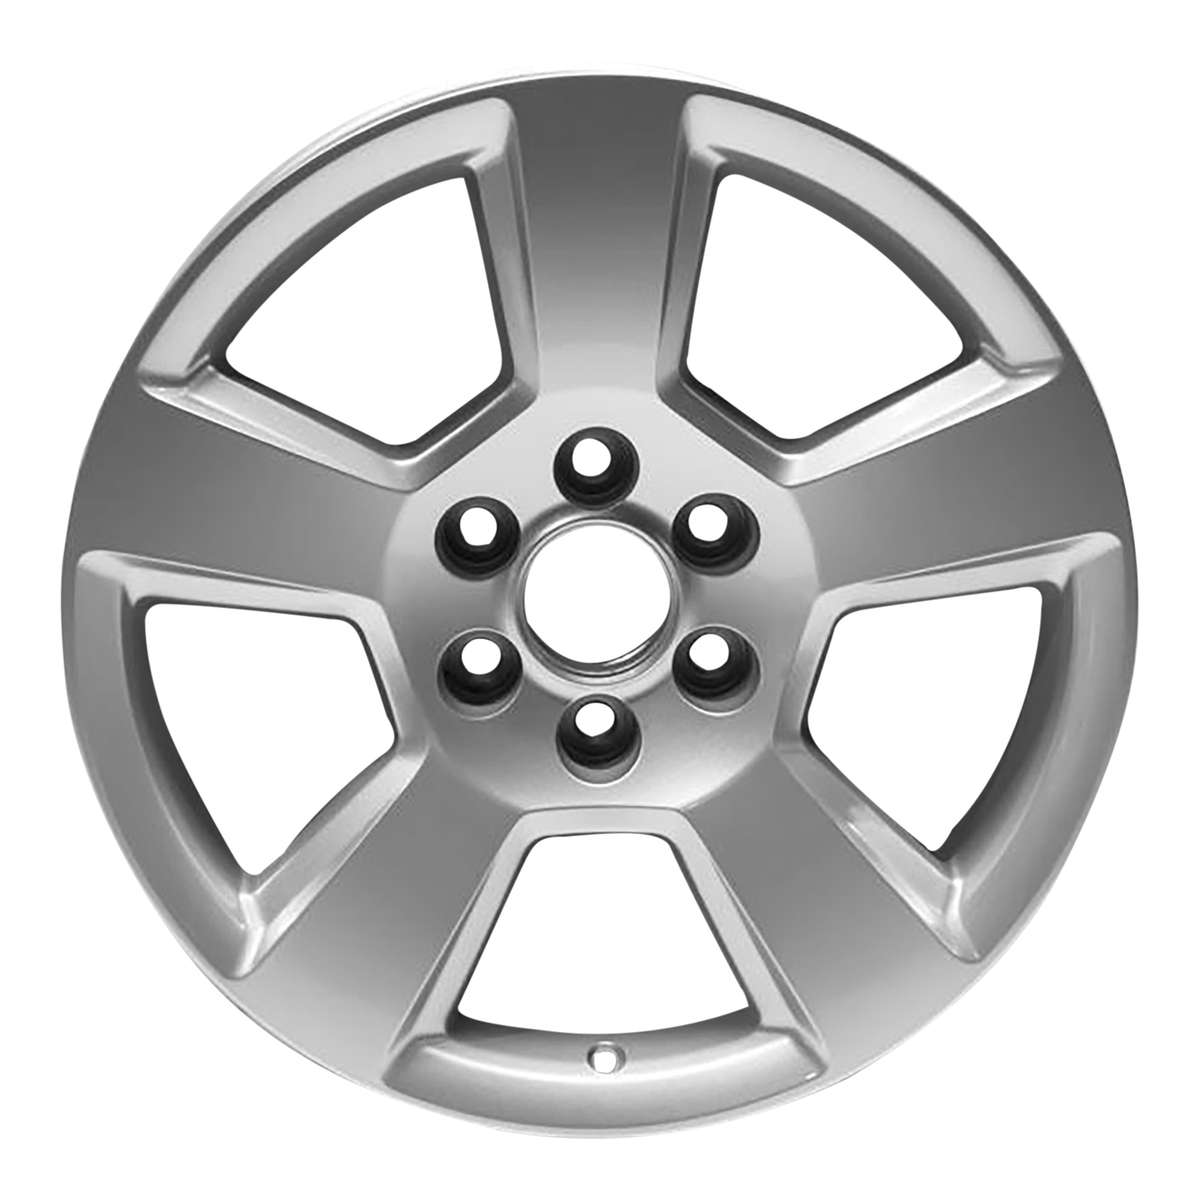 2014 Chevrolet Silverado 1500 New 20" Replacement Wheel Rim RW5652S